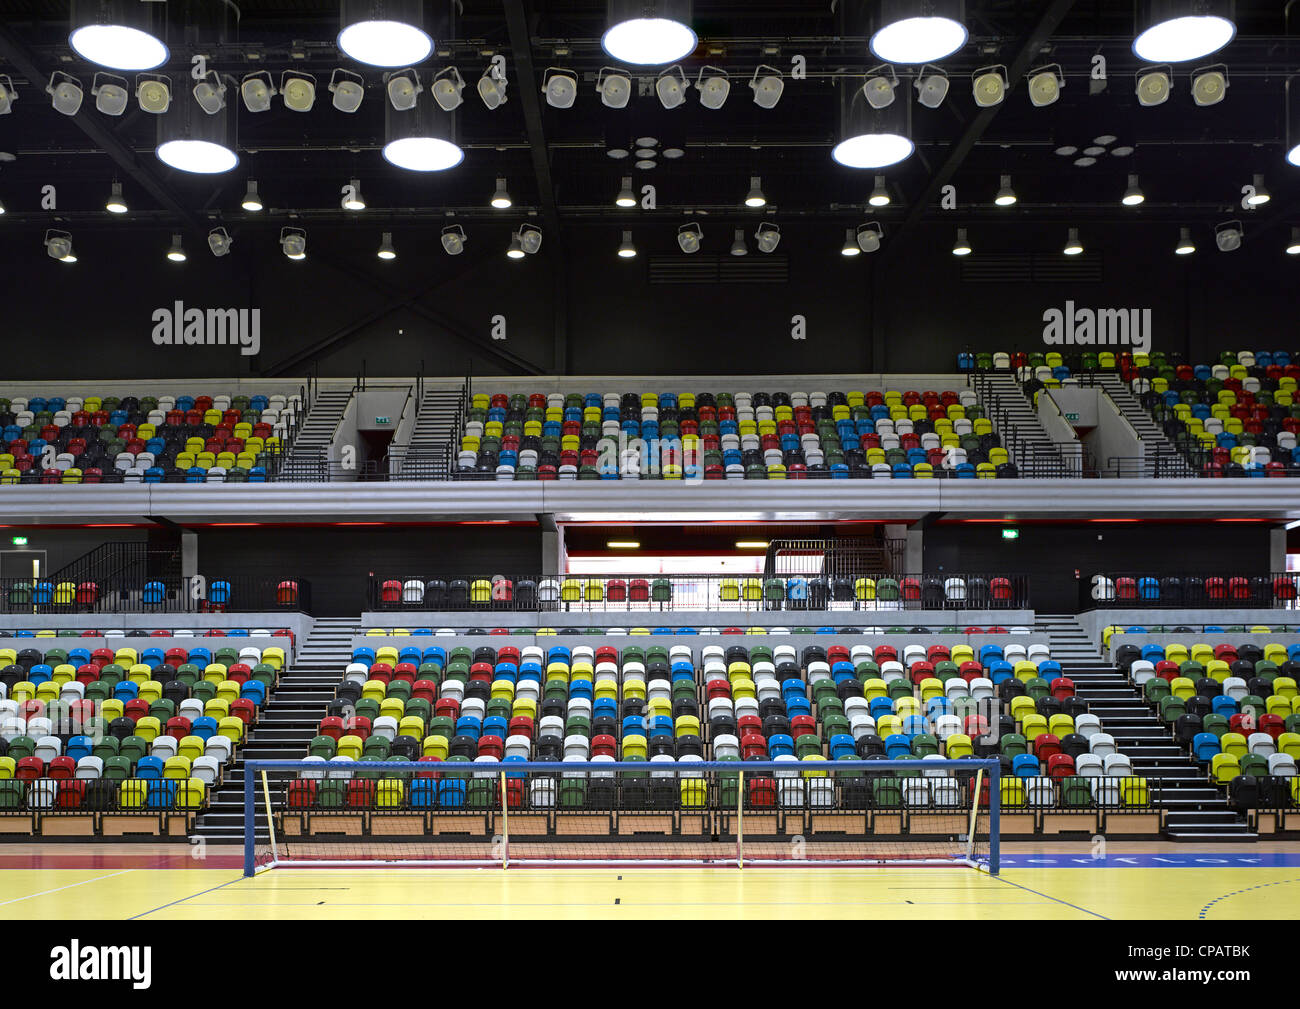 London 2012 Olympic Handball Arena, London, UK, 2011 Stock Photo